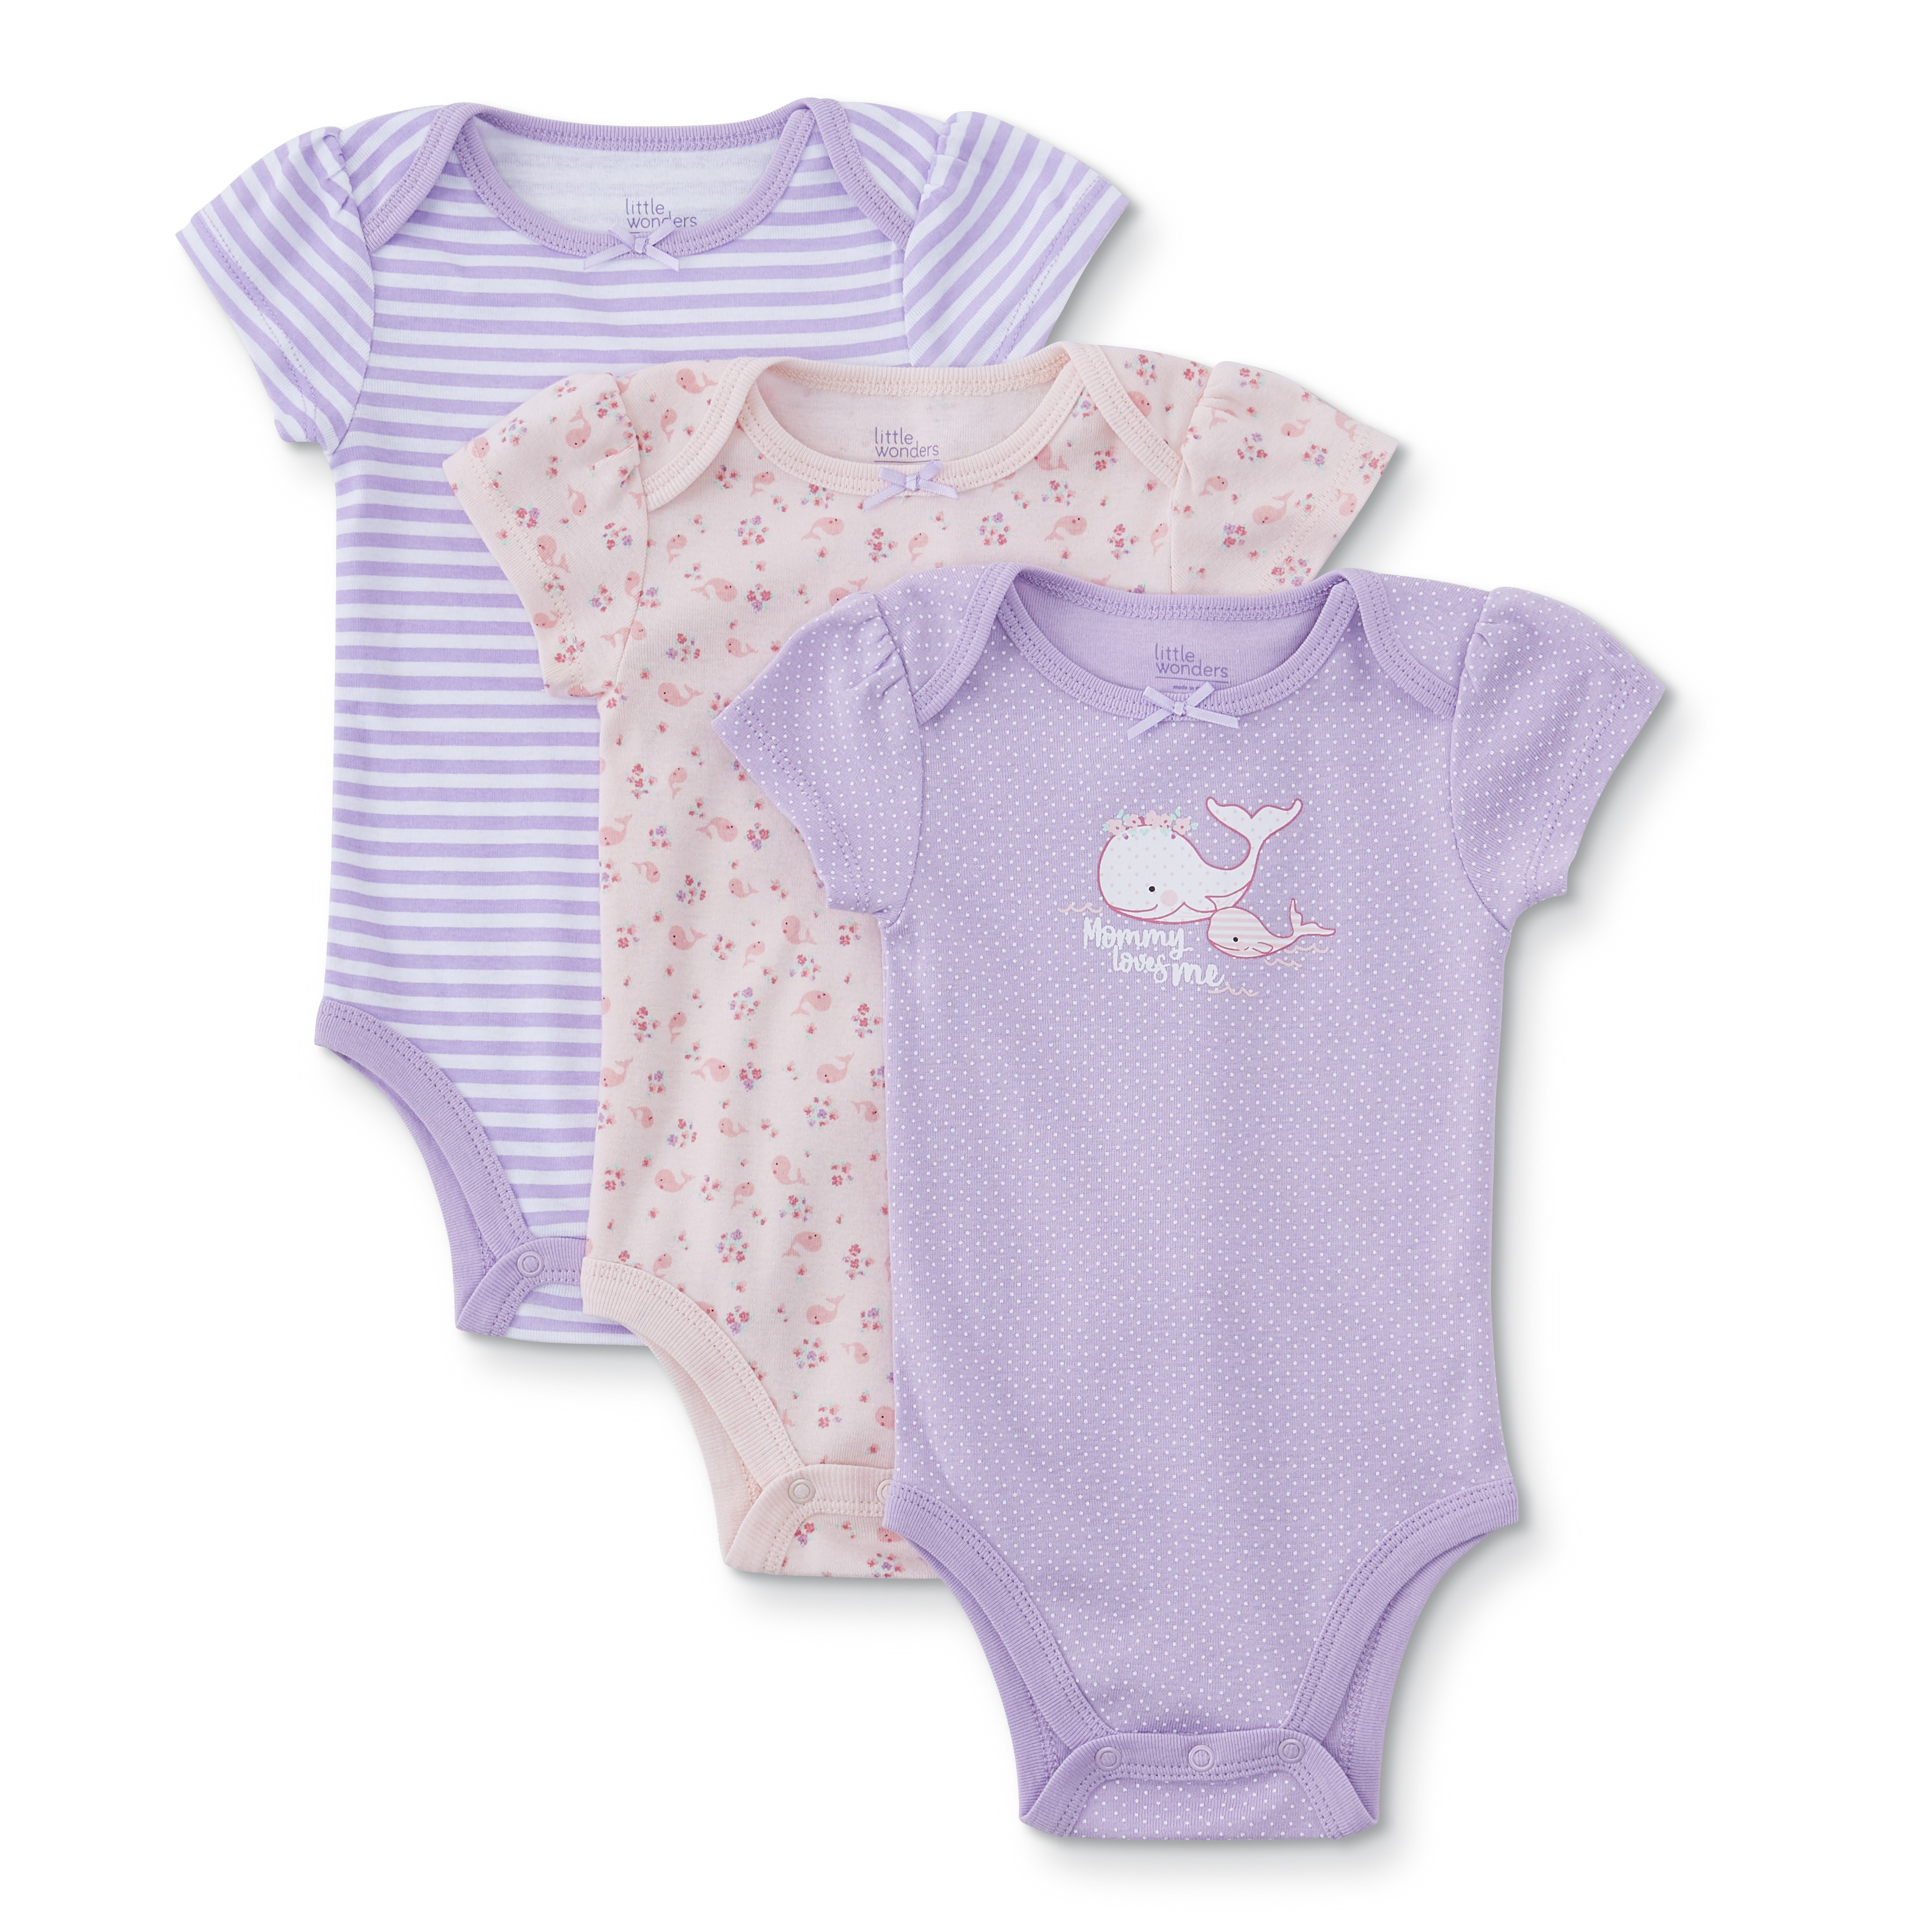 Little Wonders  Infant Girls' 3-Pack Short-Sleeve Bodysuits - Whale